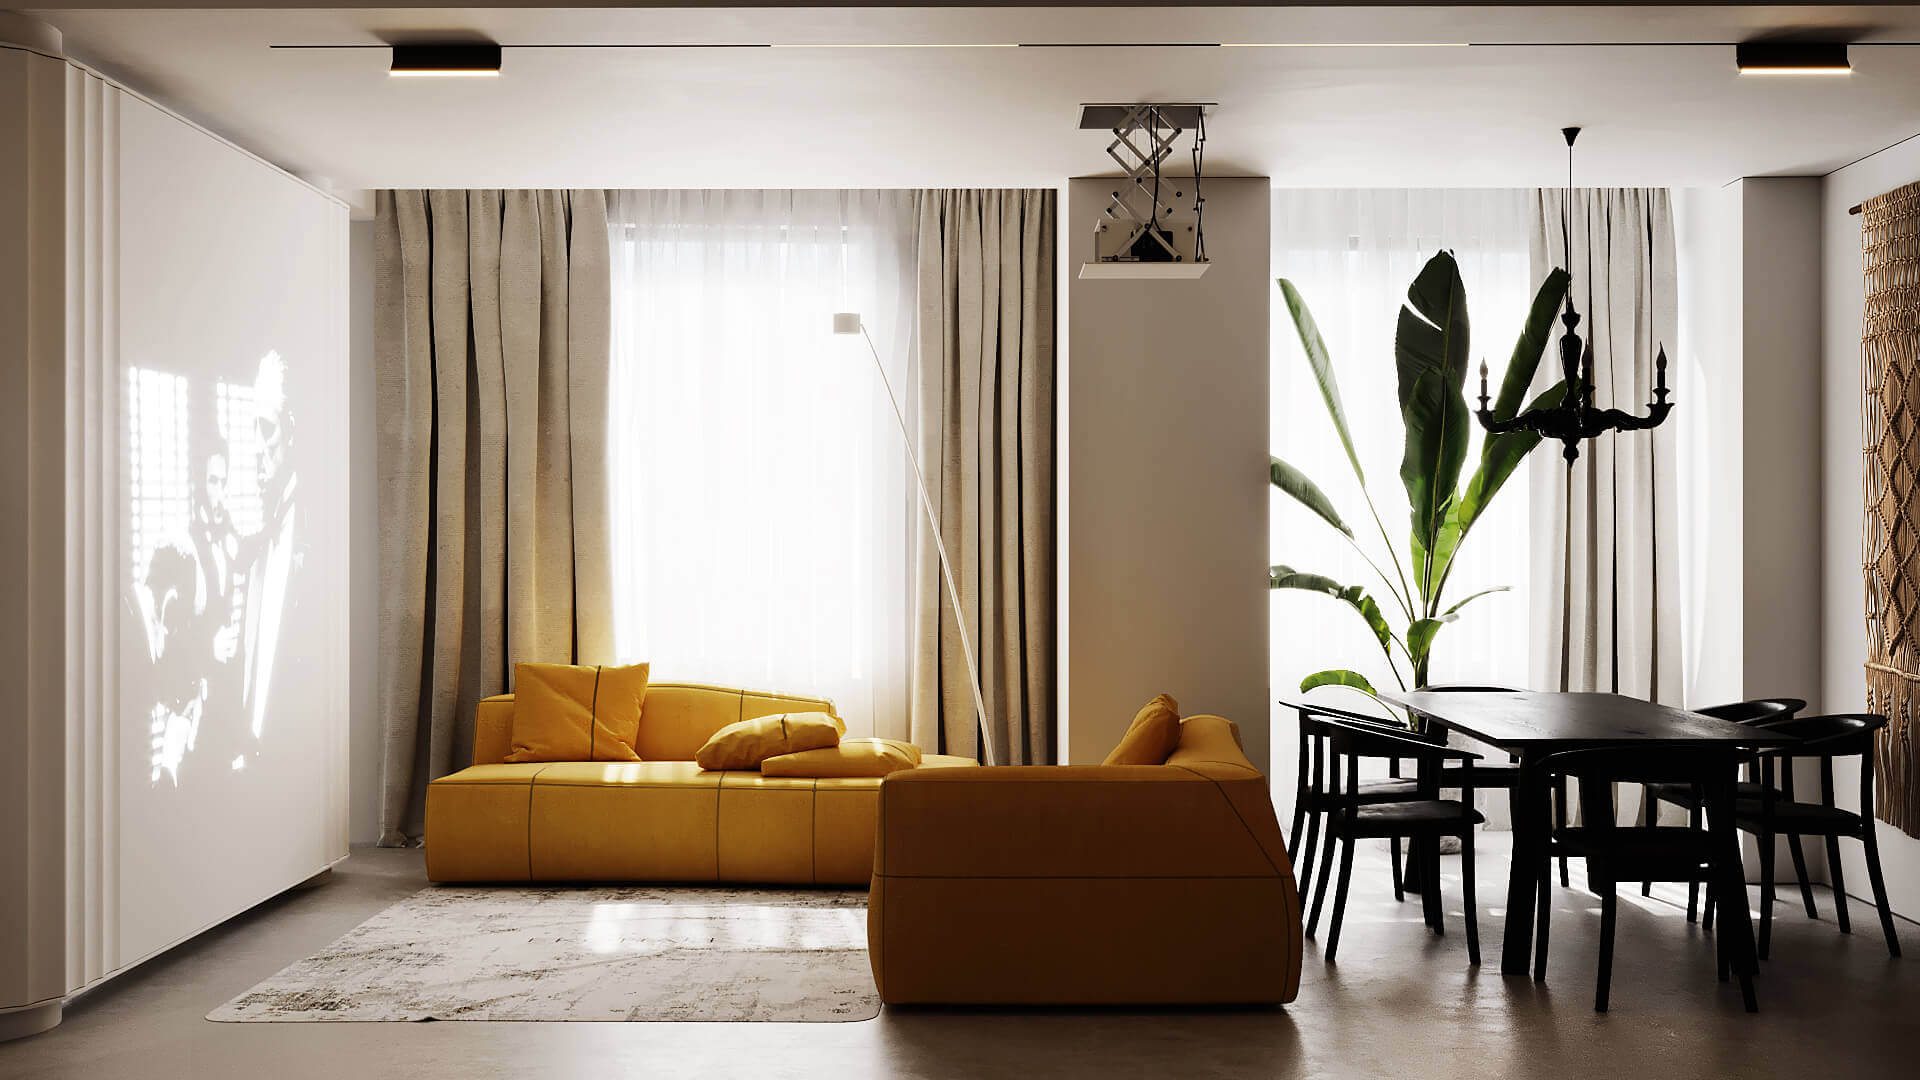 Oasis Apartment living room dining room design - cgi visualization